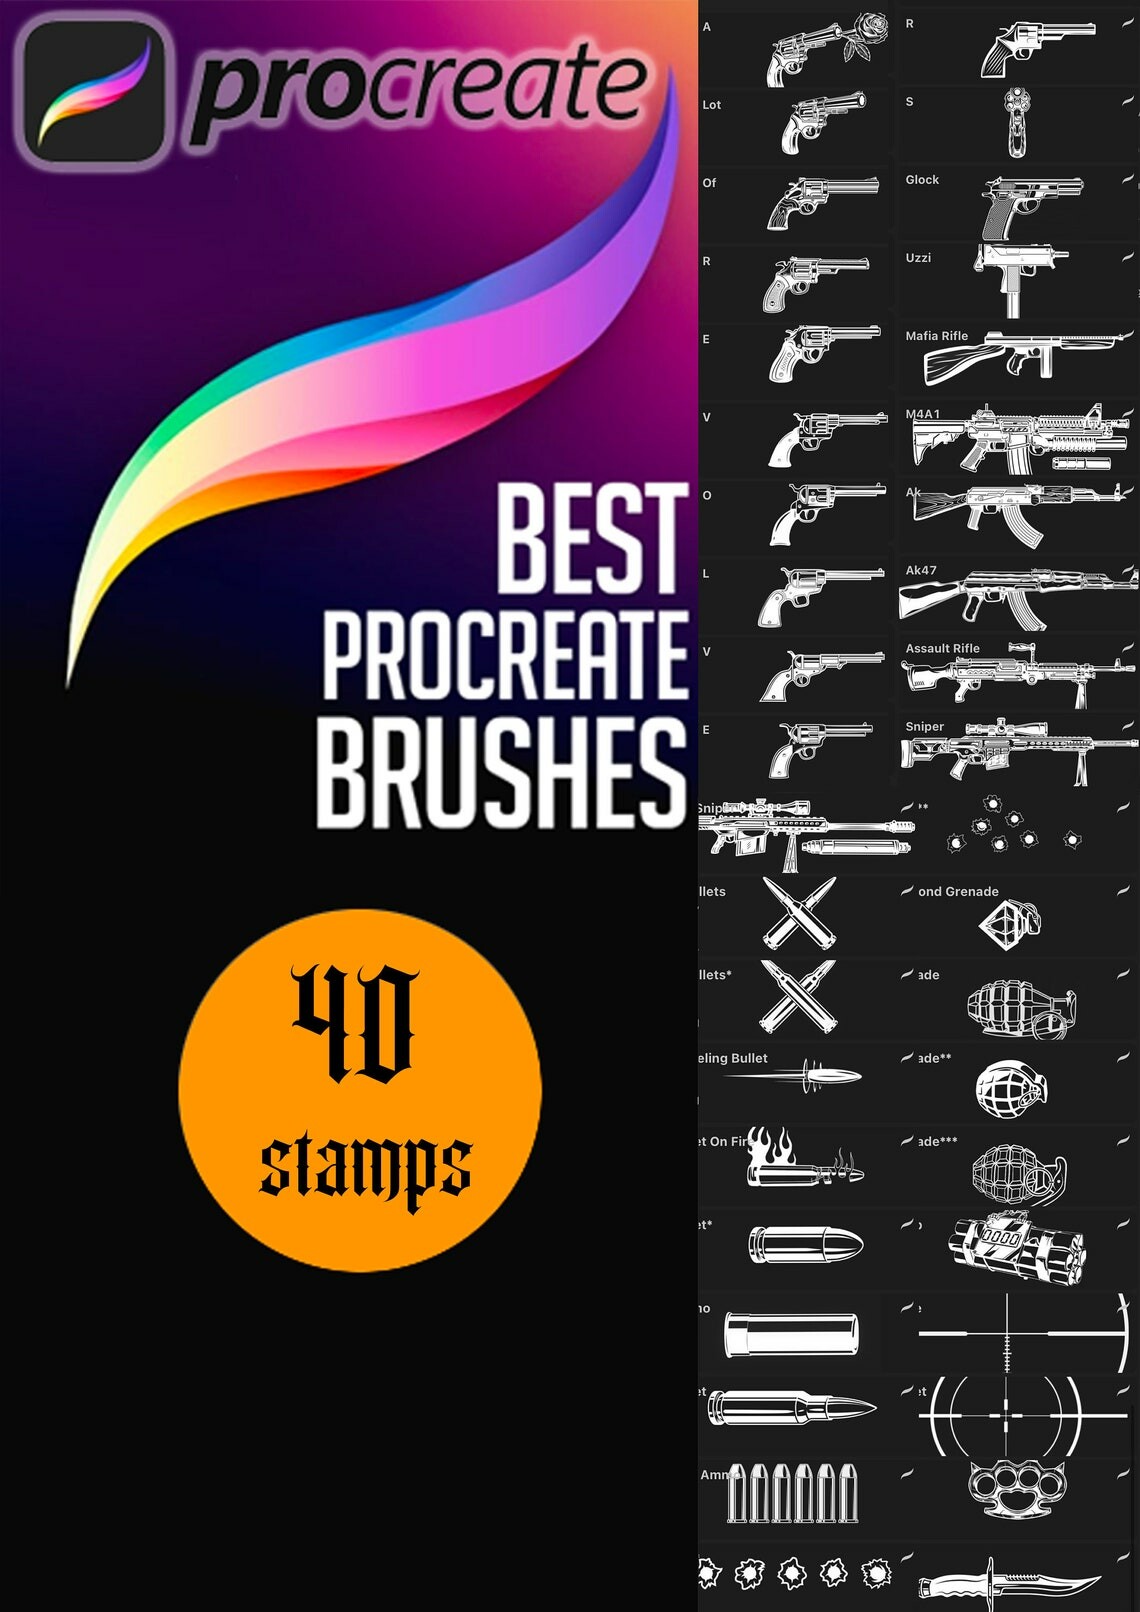 Procreate Tattoo Art vol1  50 Stamps  Brush Galaxy